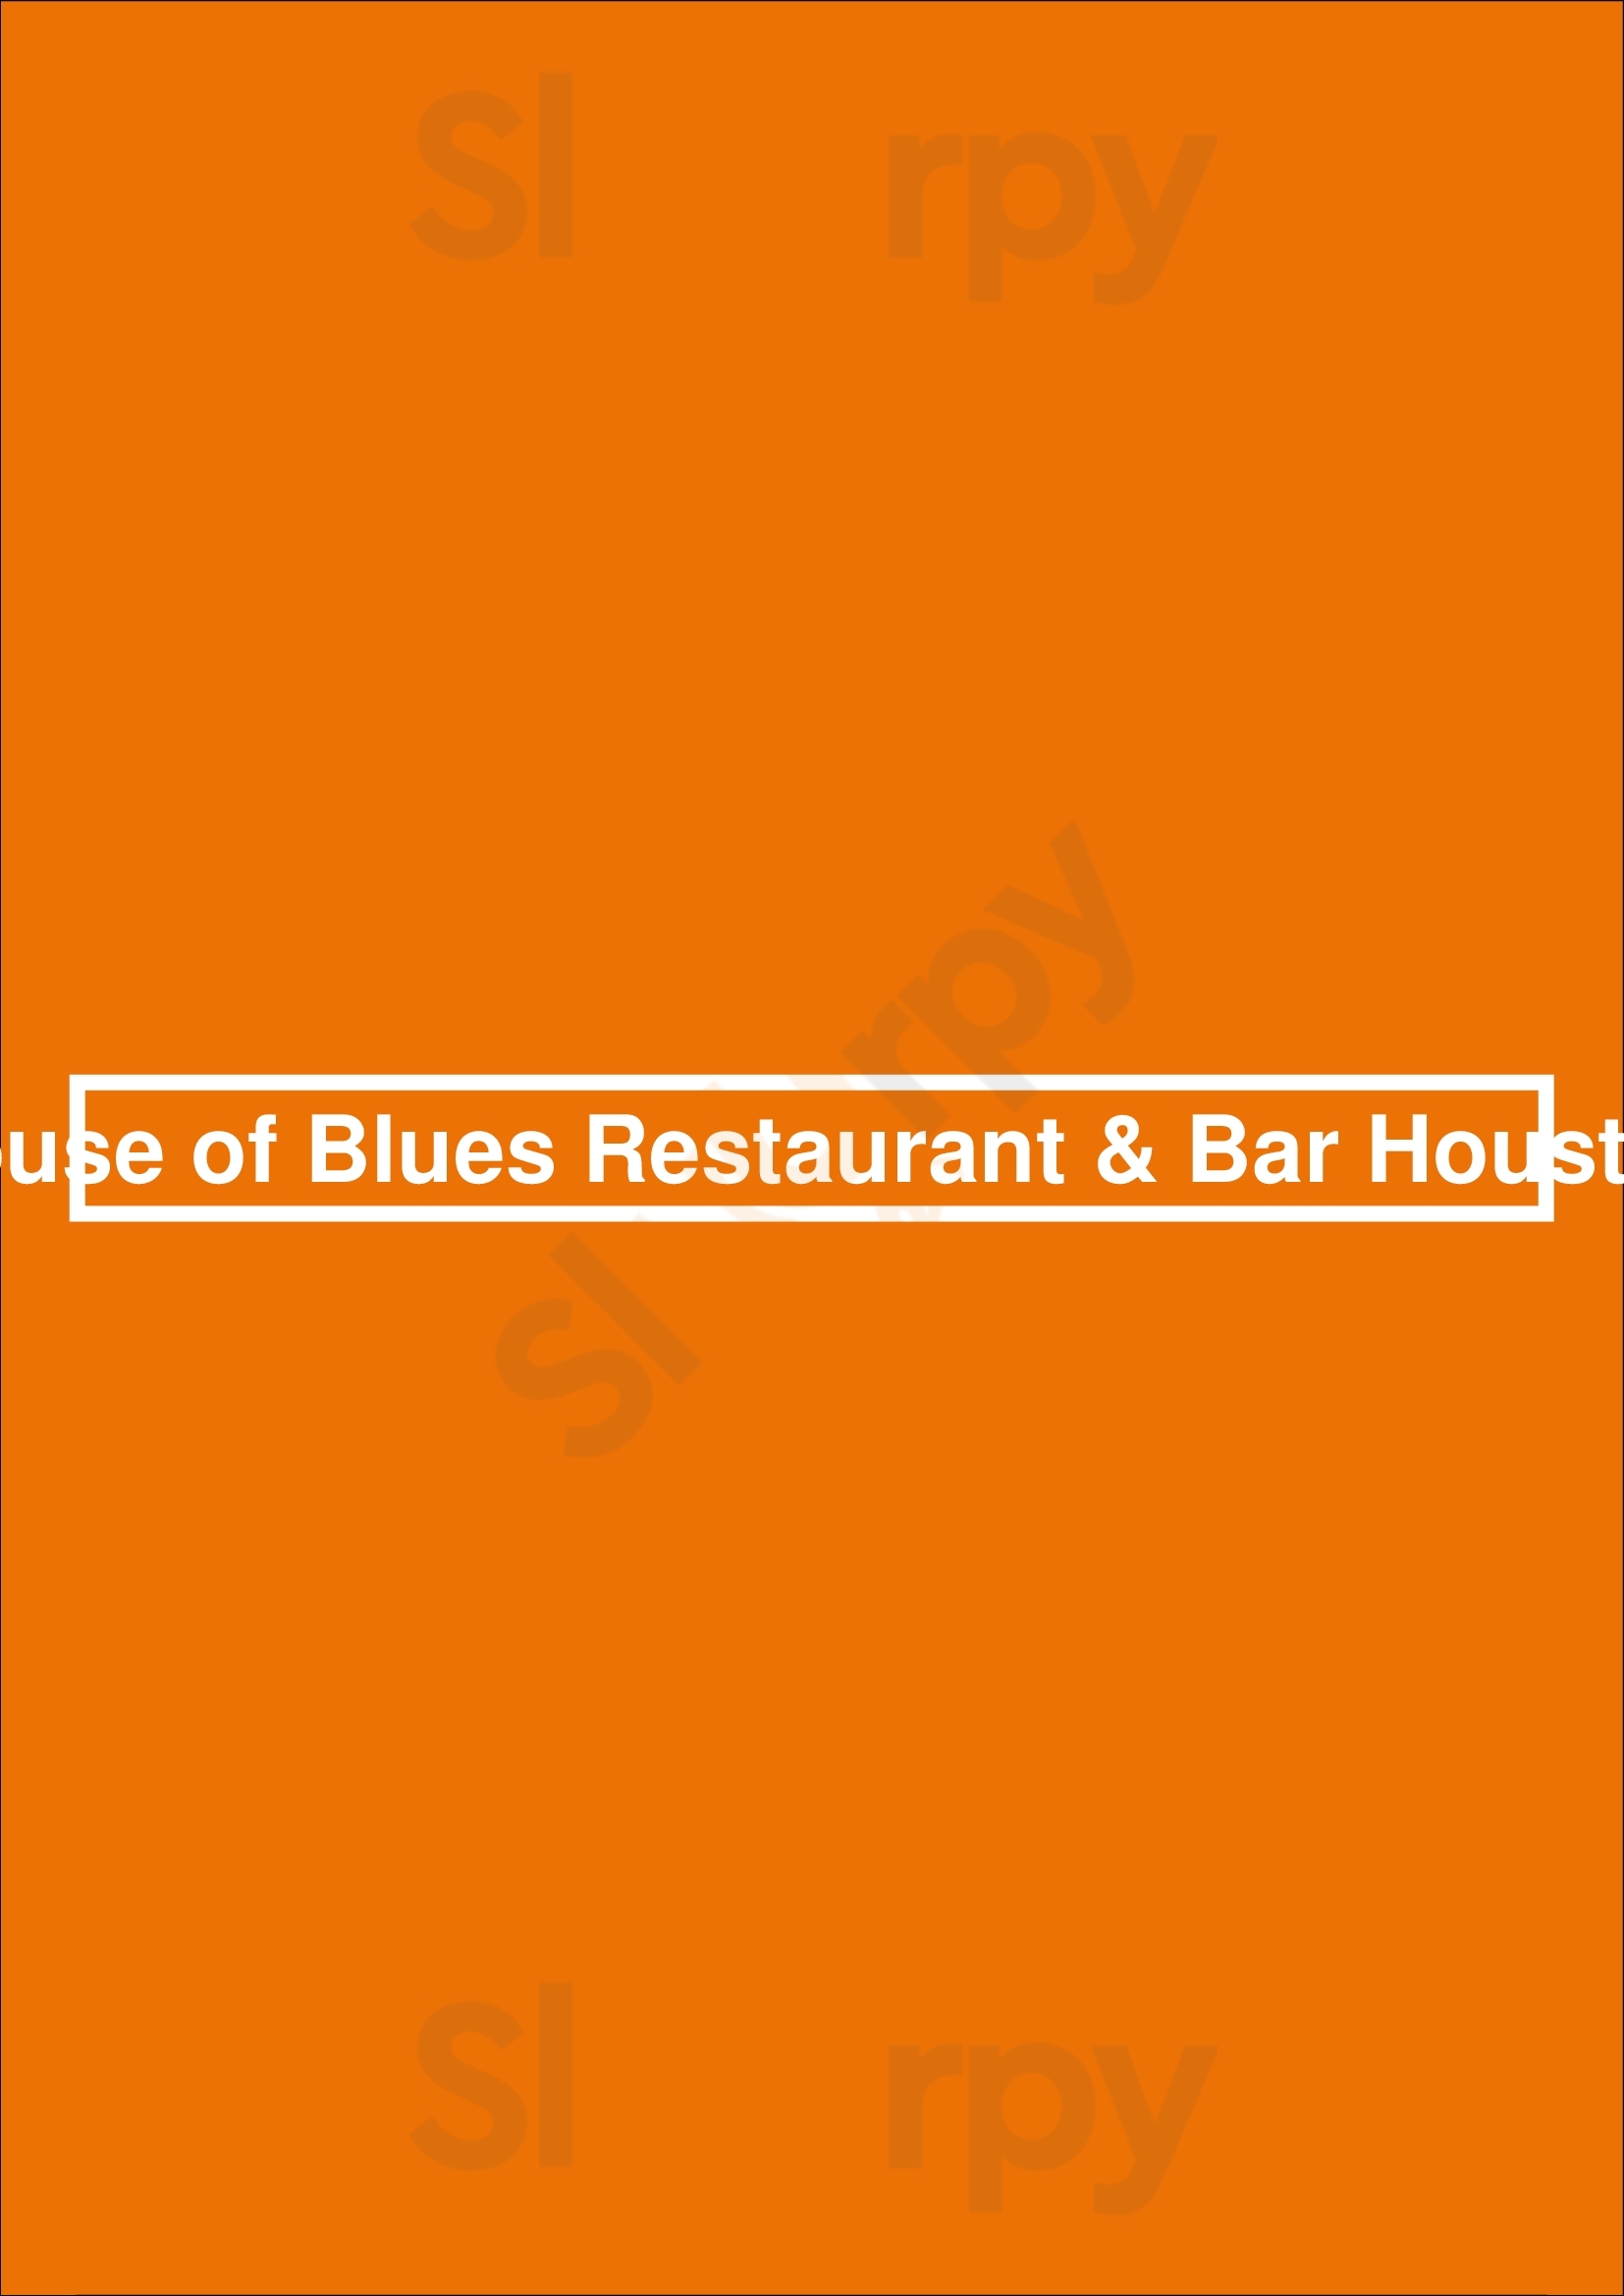 House Of Blues Restaurant & Bar Houston Houston Menu - 1